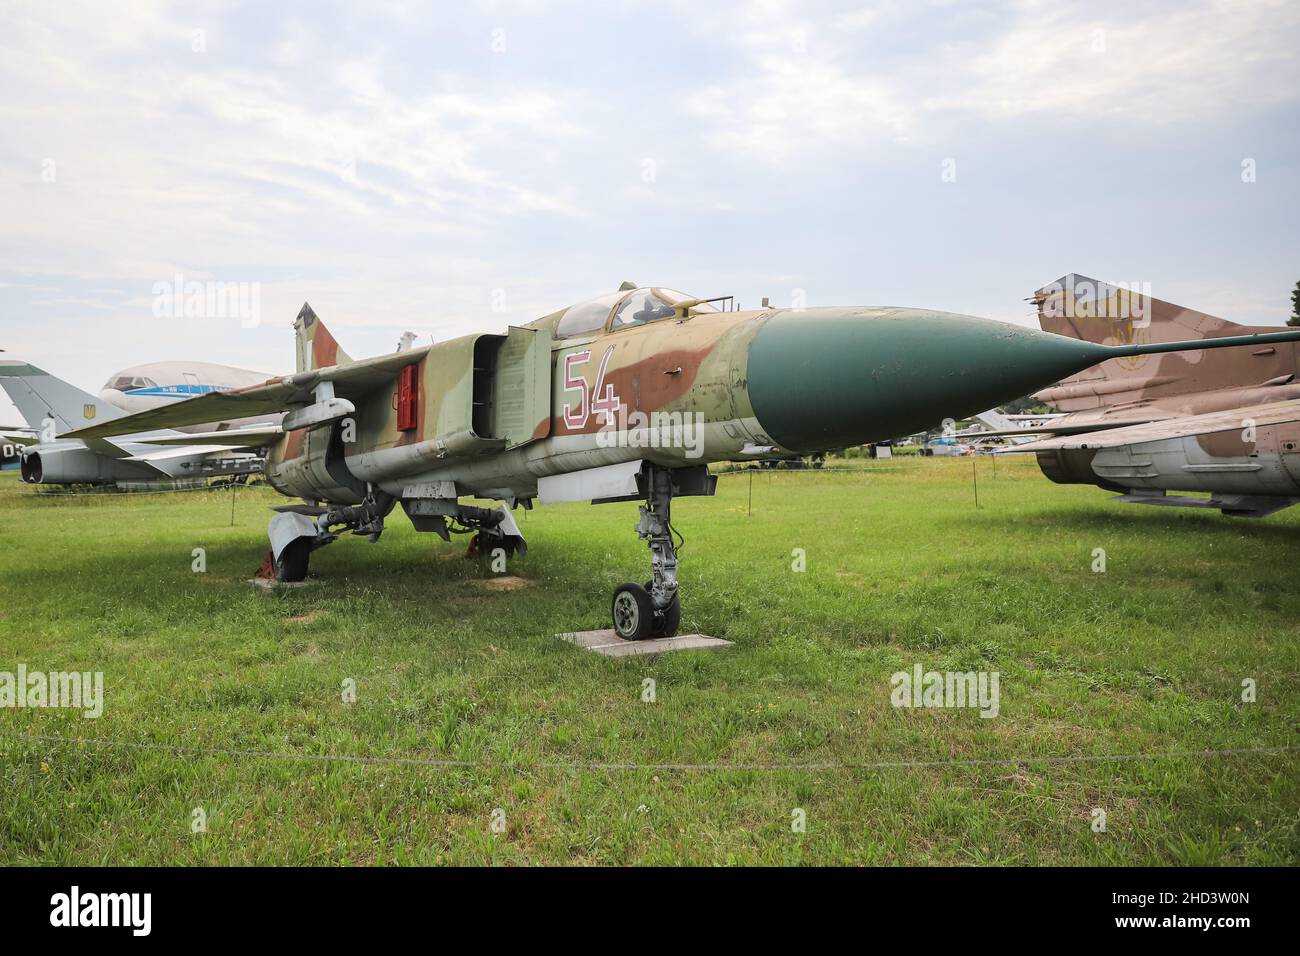 KIEV, UKRAINE - AUGUST 01, 2021: Ukrainian Air Force Mikoyan-Gurevich MiG-23ML Flogger G displayed at Oleg Antonov State Aviation Museum Stock Photo